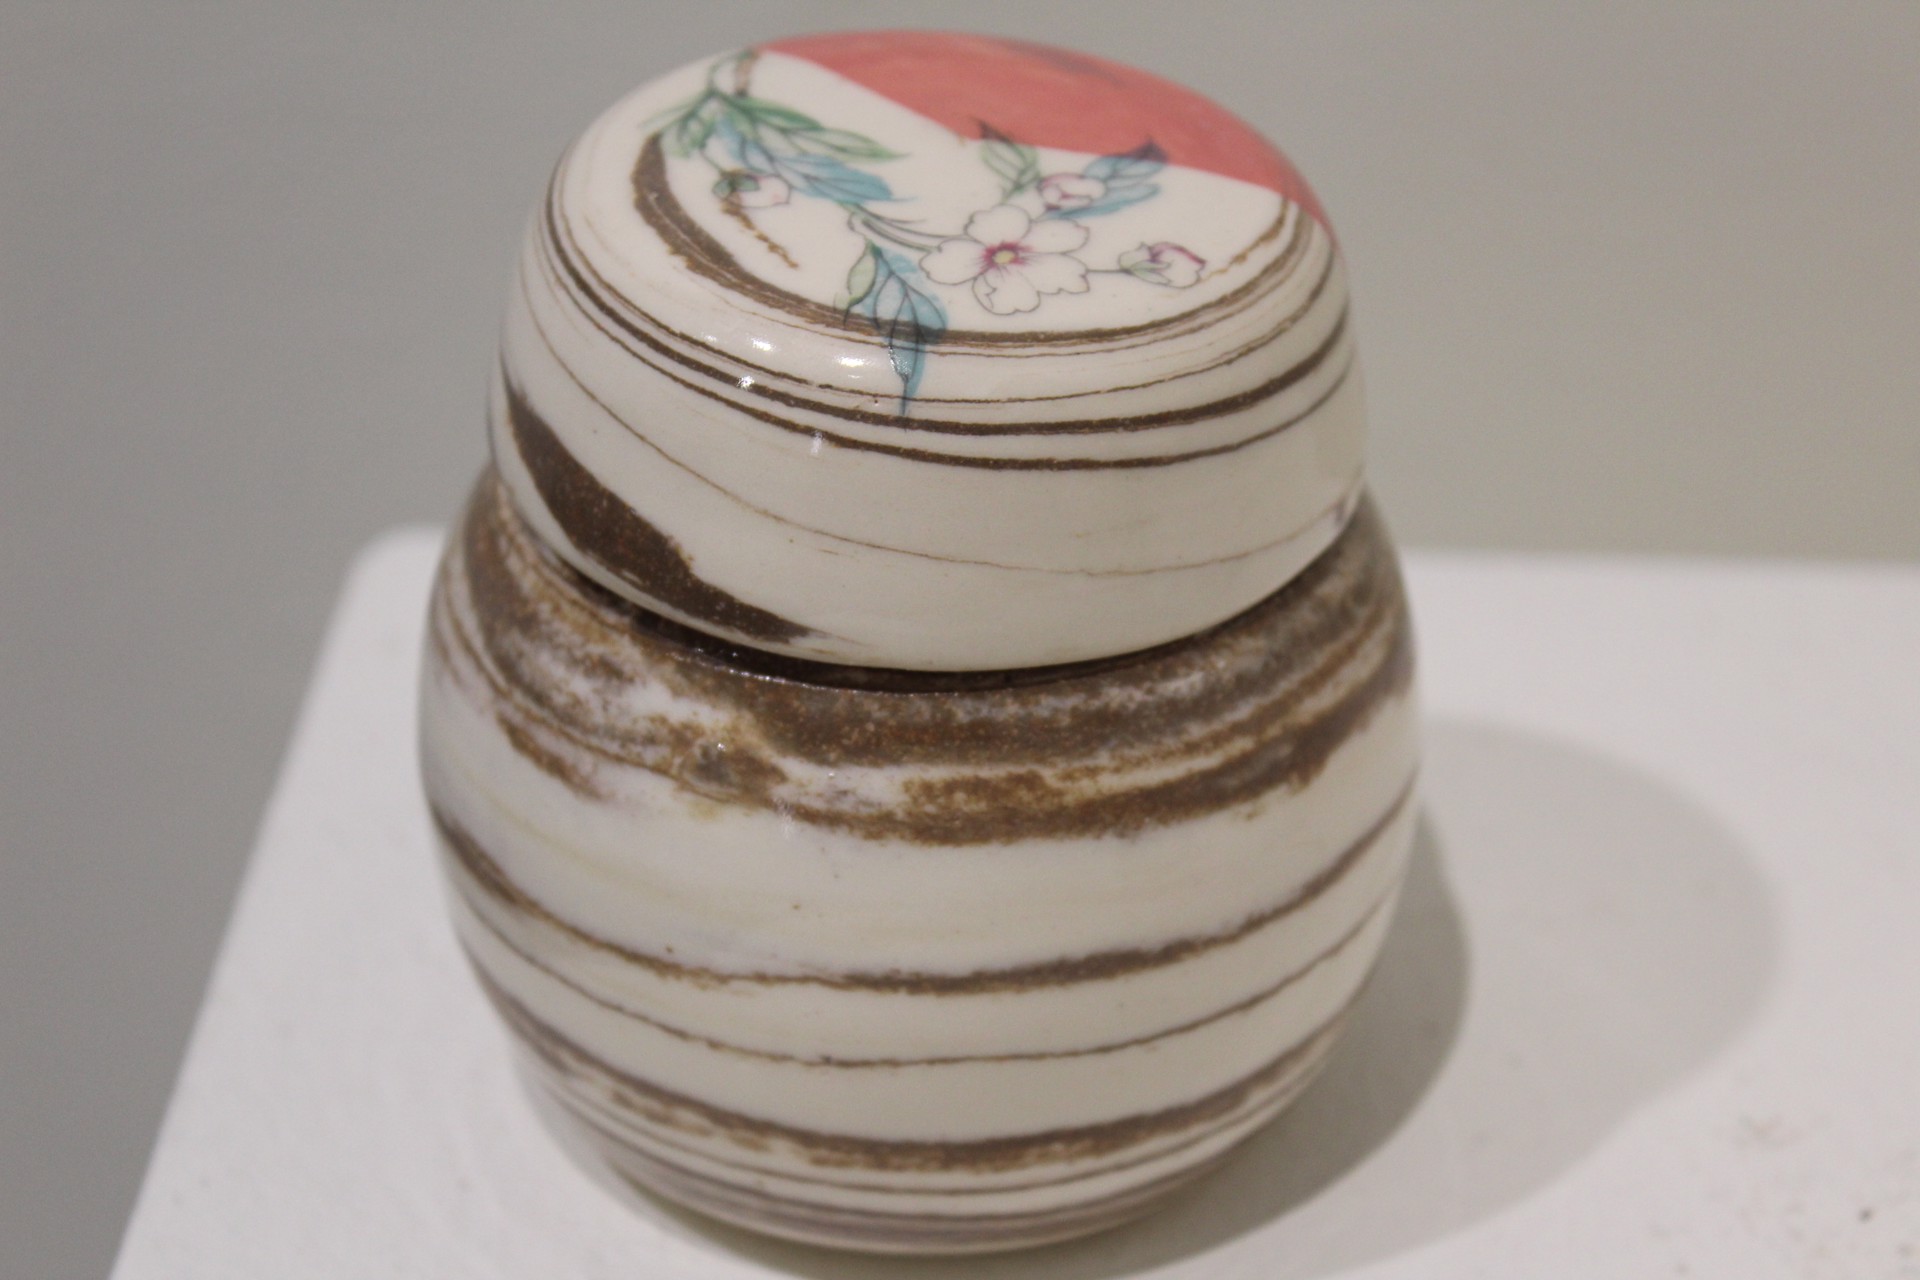 Small Lidded Jar with Flowers (Pink) by Kristen Kinnaley